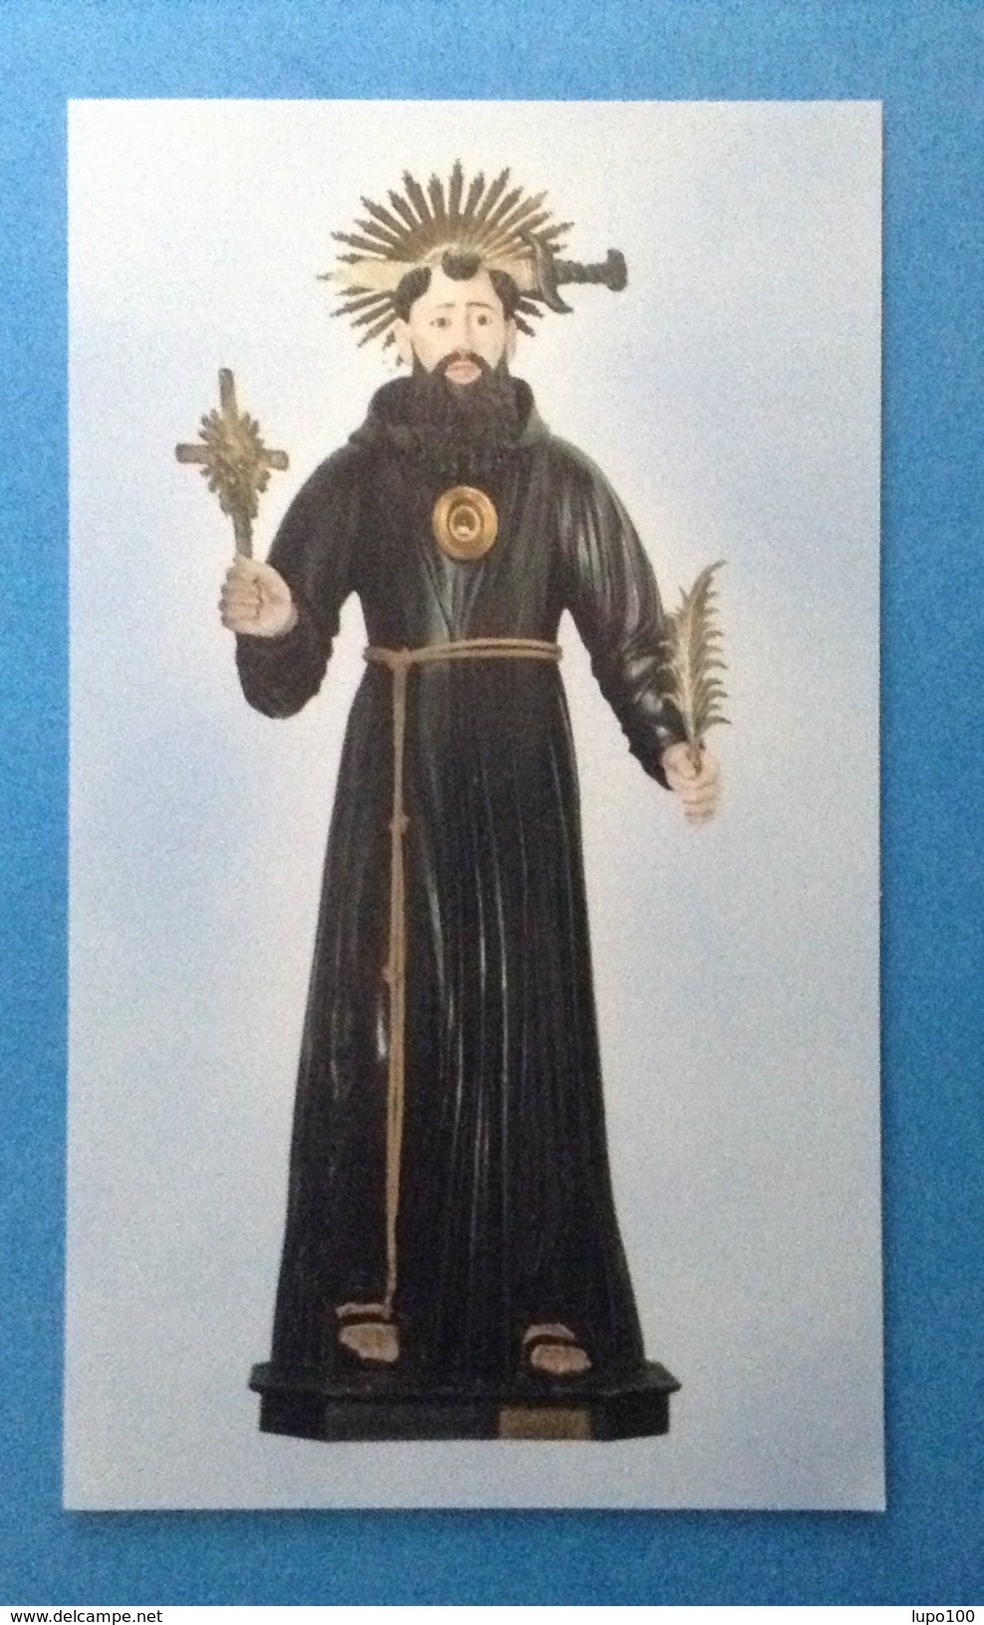 Santino Holy Card San Daniele Martire Frati Minori Cappuccini Belvedere Marittimo Cs - Images Religieuses